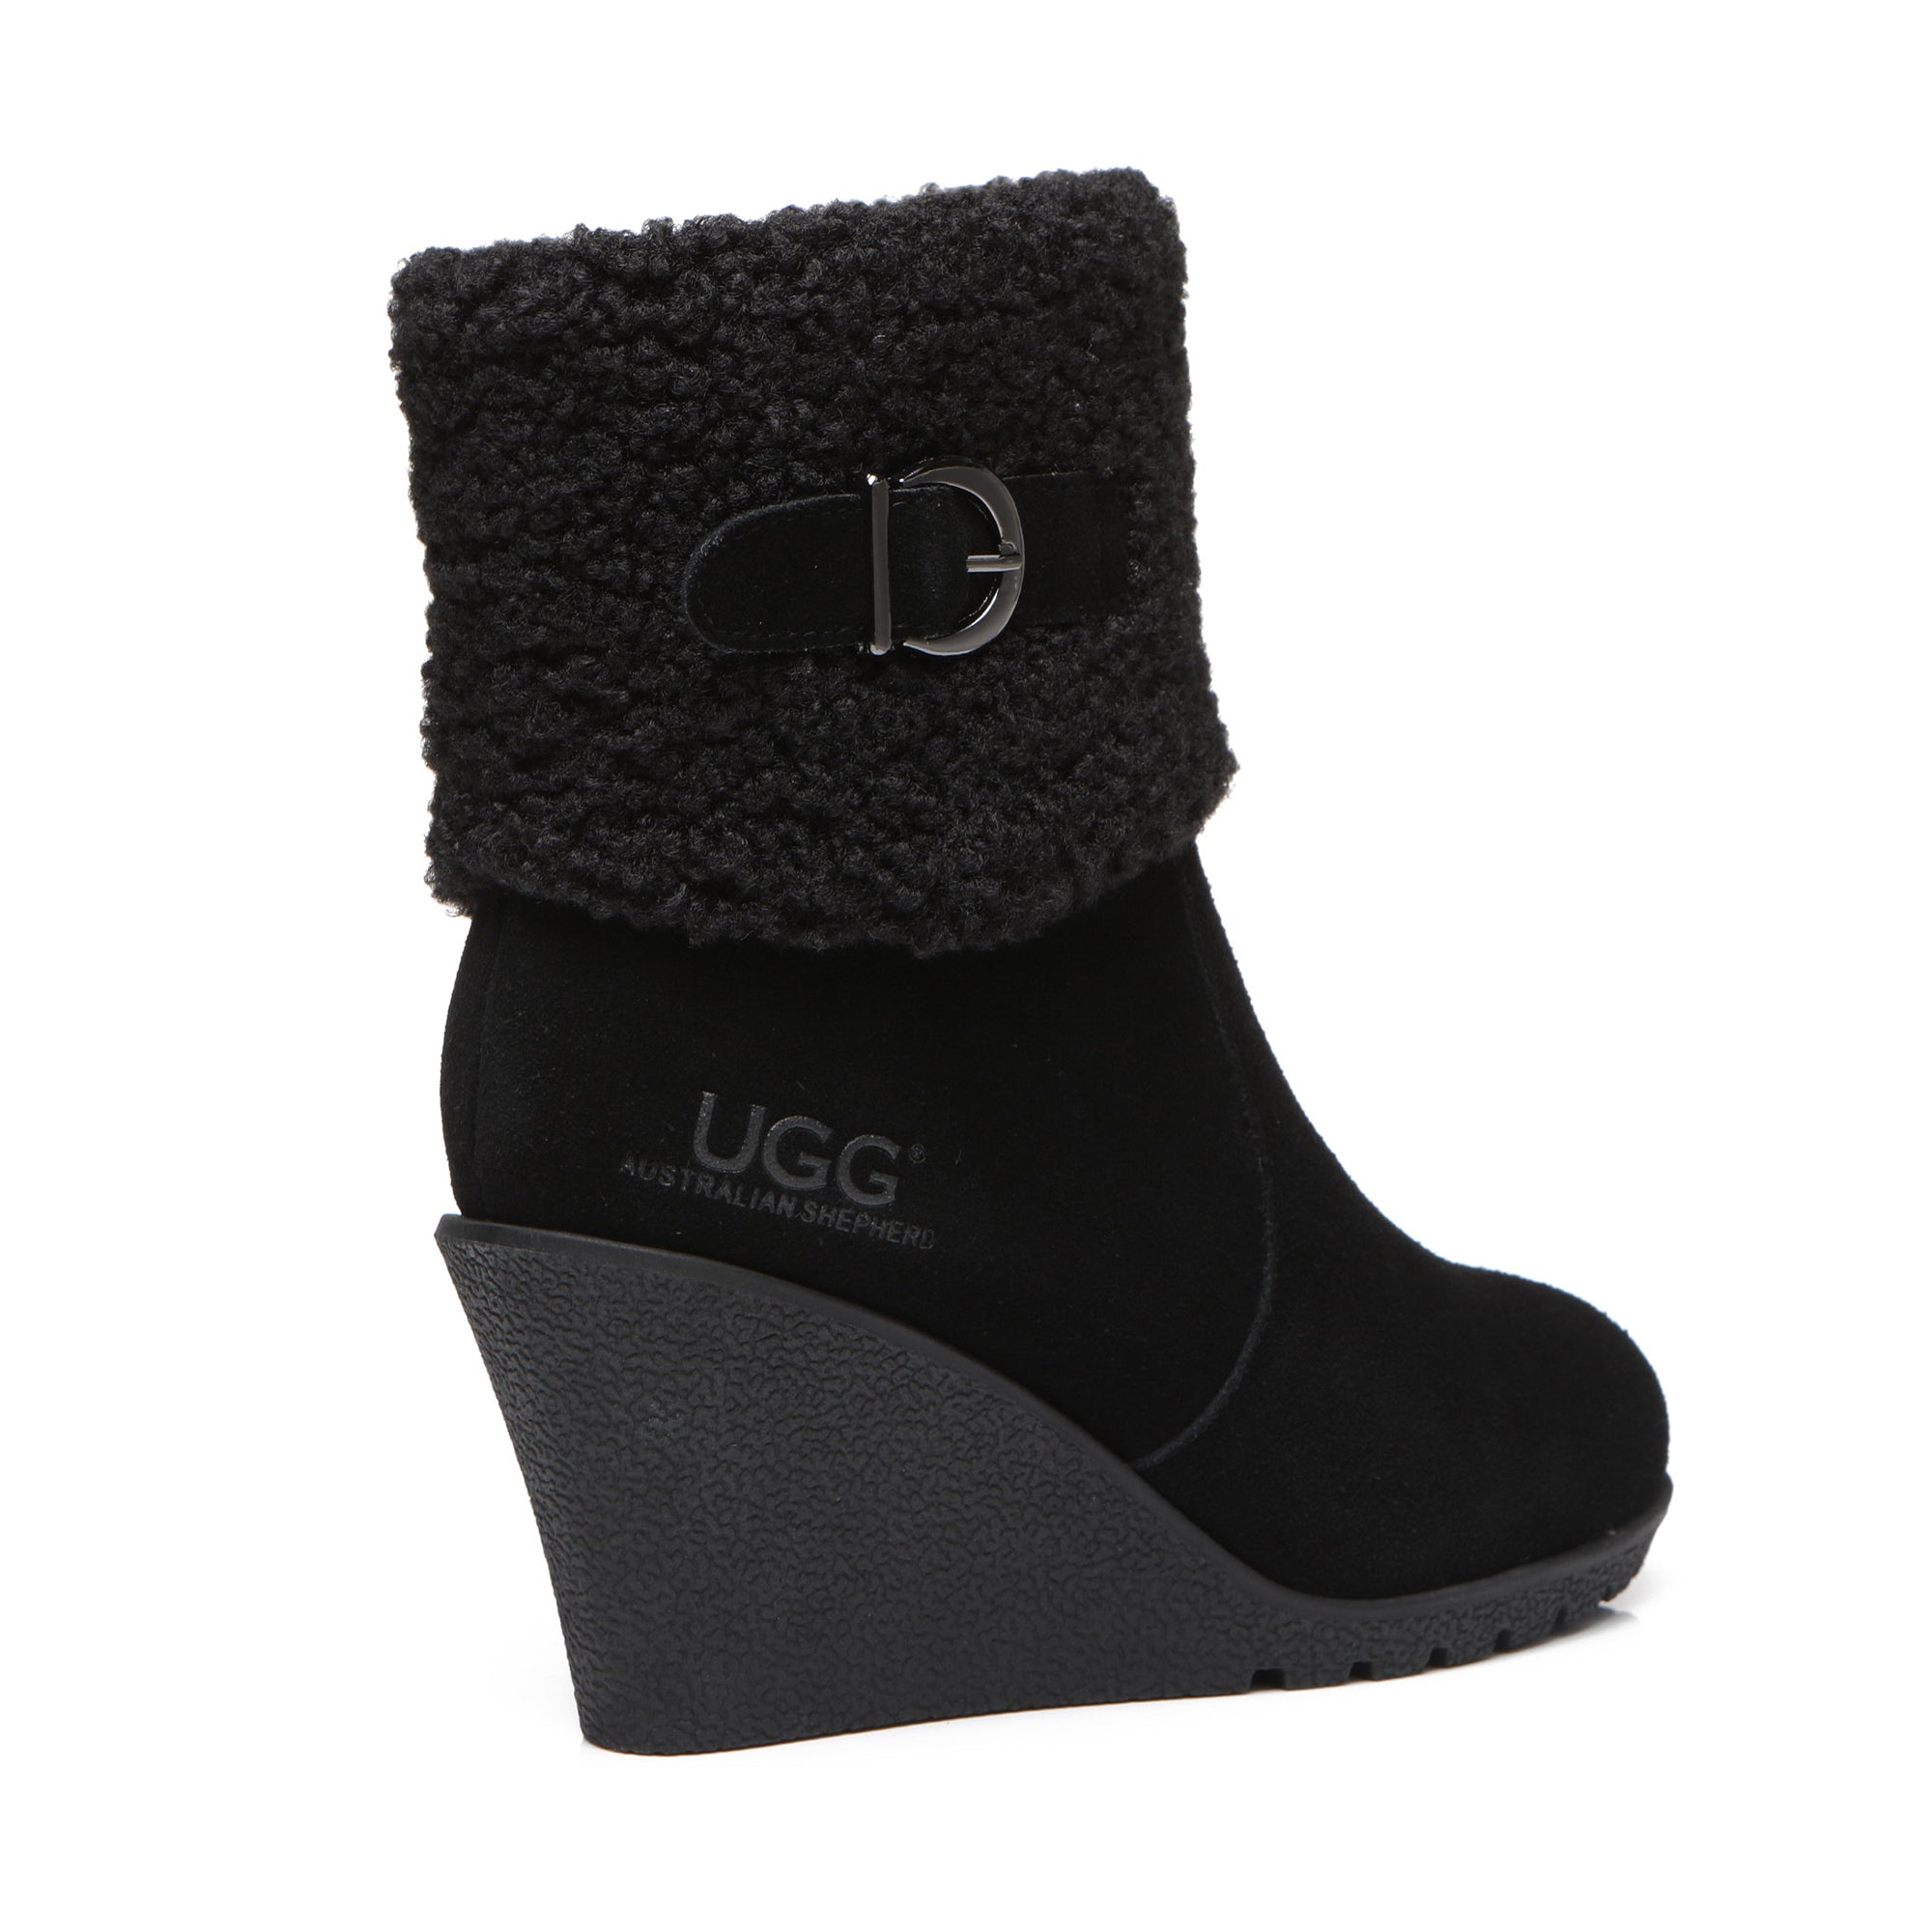 UGG Joey Wedge Fashion Boots